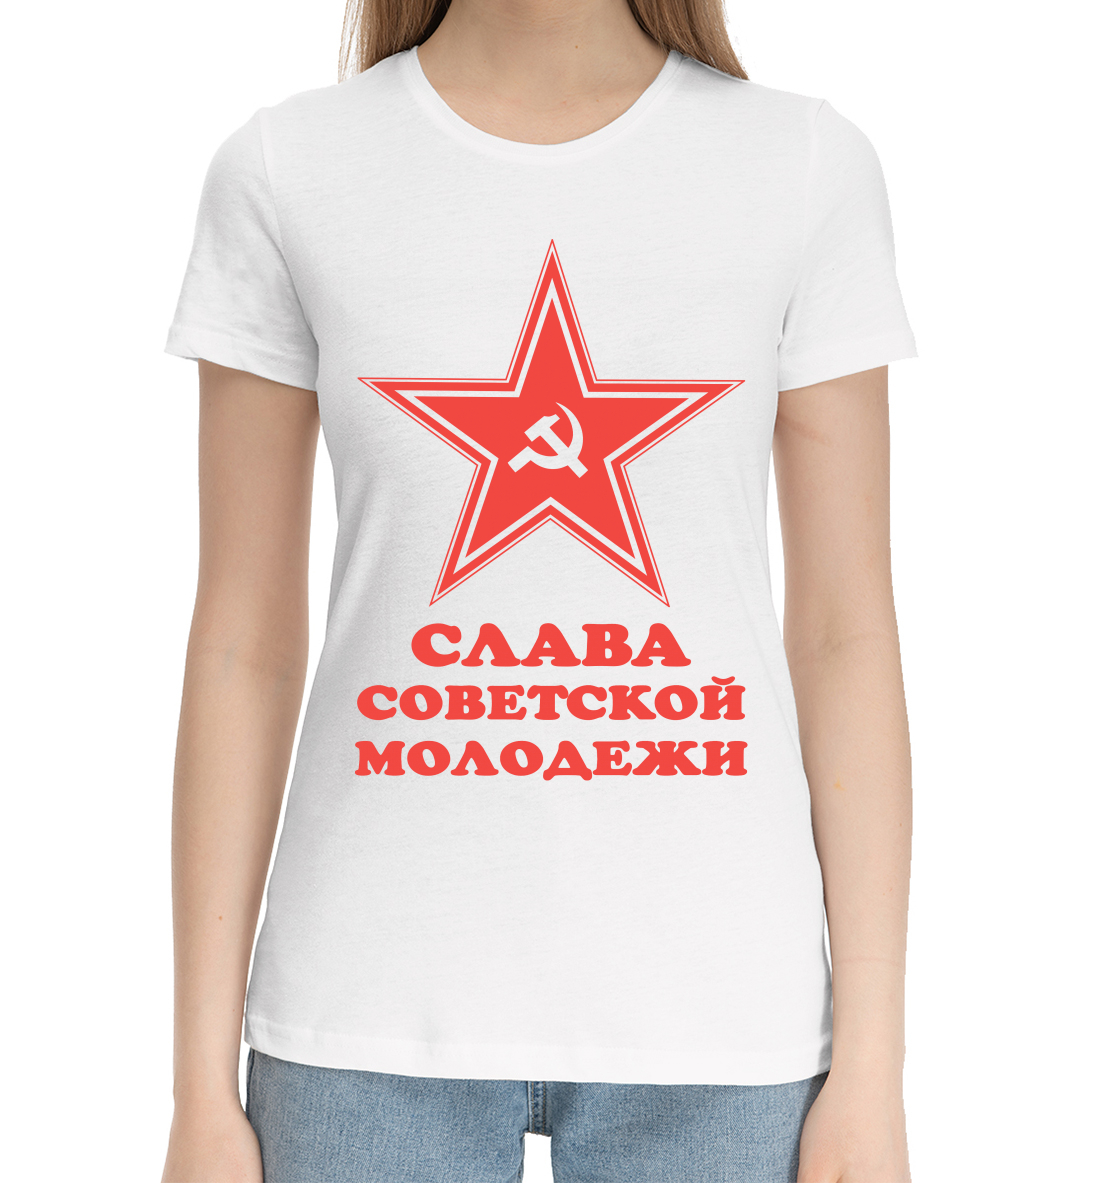 Слава советской молодежи